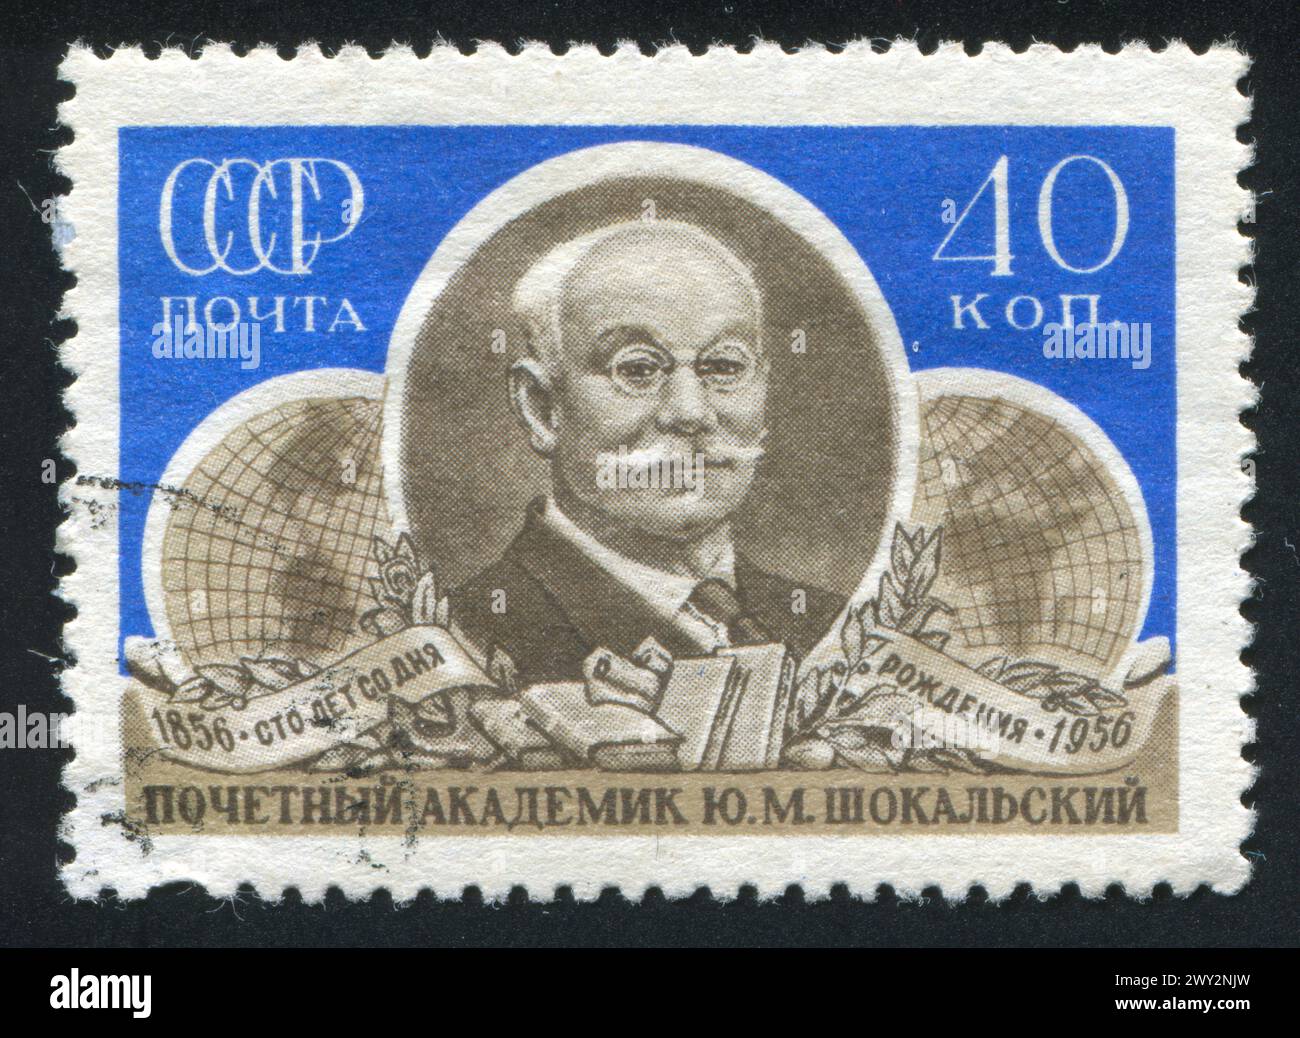 RUSSIA - CIRCA 1956: stamp printed by Russia, shows Yuli Shokalski, oceanographer and geodesist, circa 1956 Stock Photo